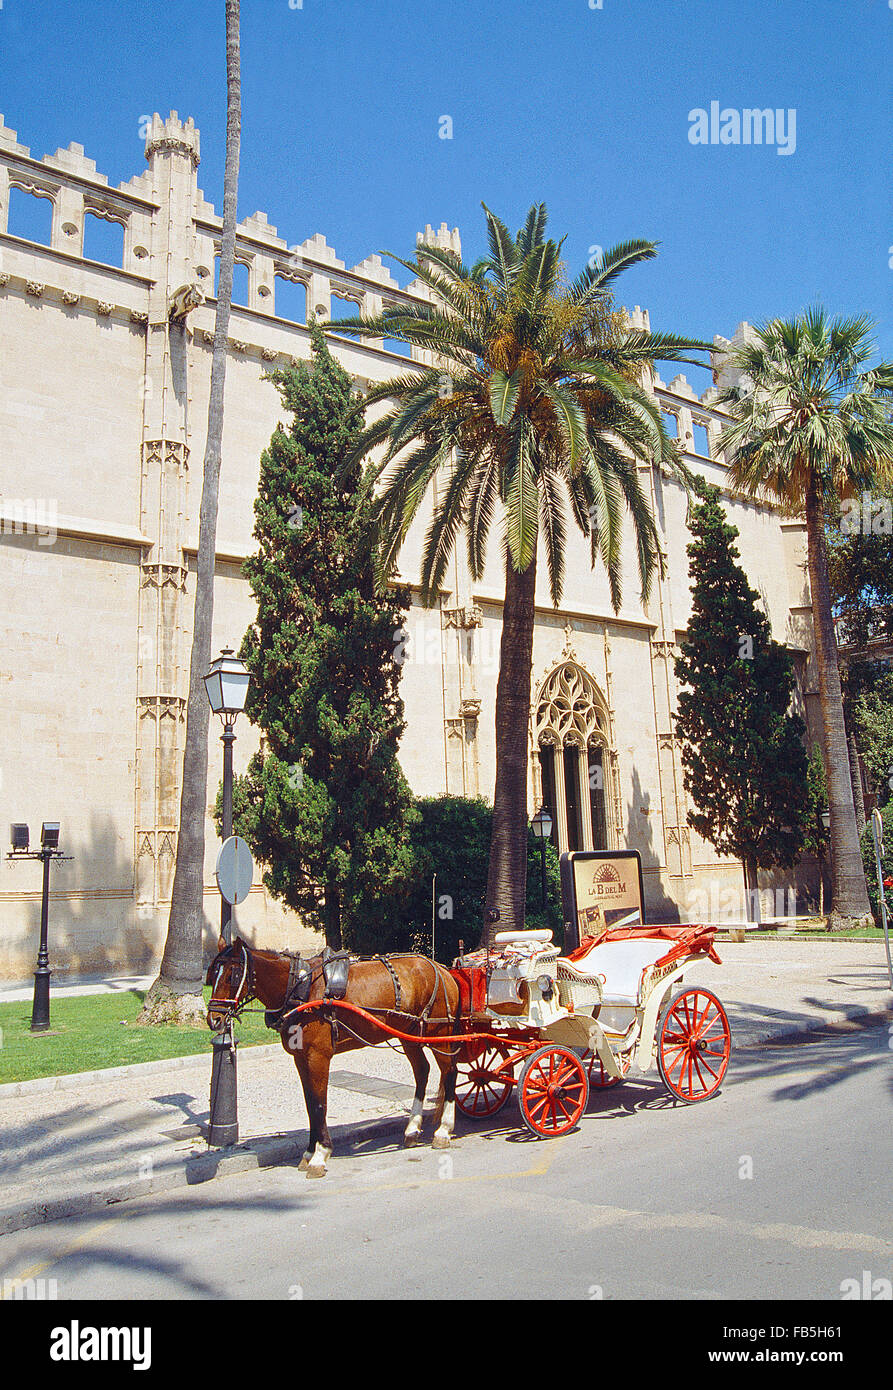 Horse-drawn carriage next to the Lonja. Palma de Mallorca, Balearic Islands, Spain. Stock Photo